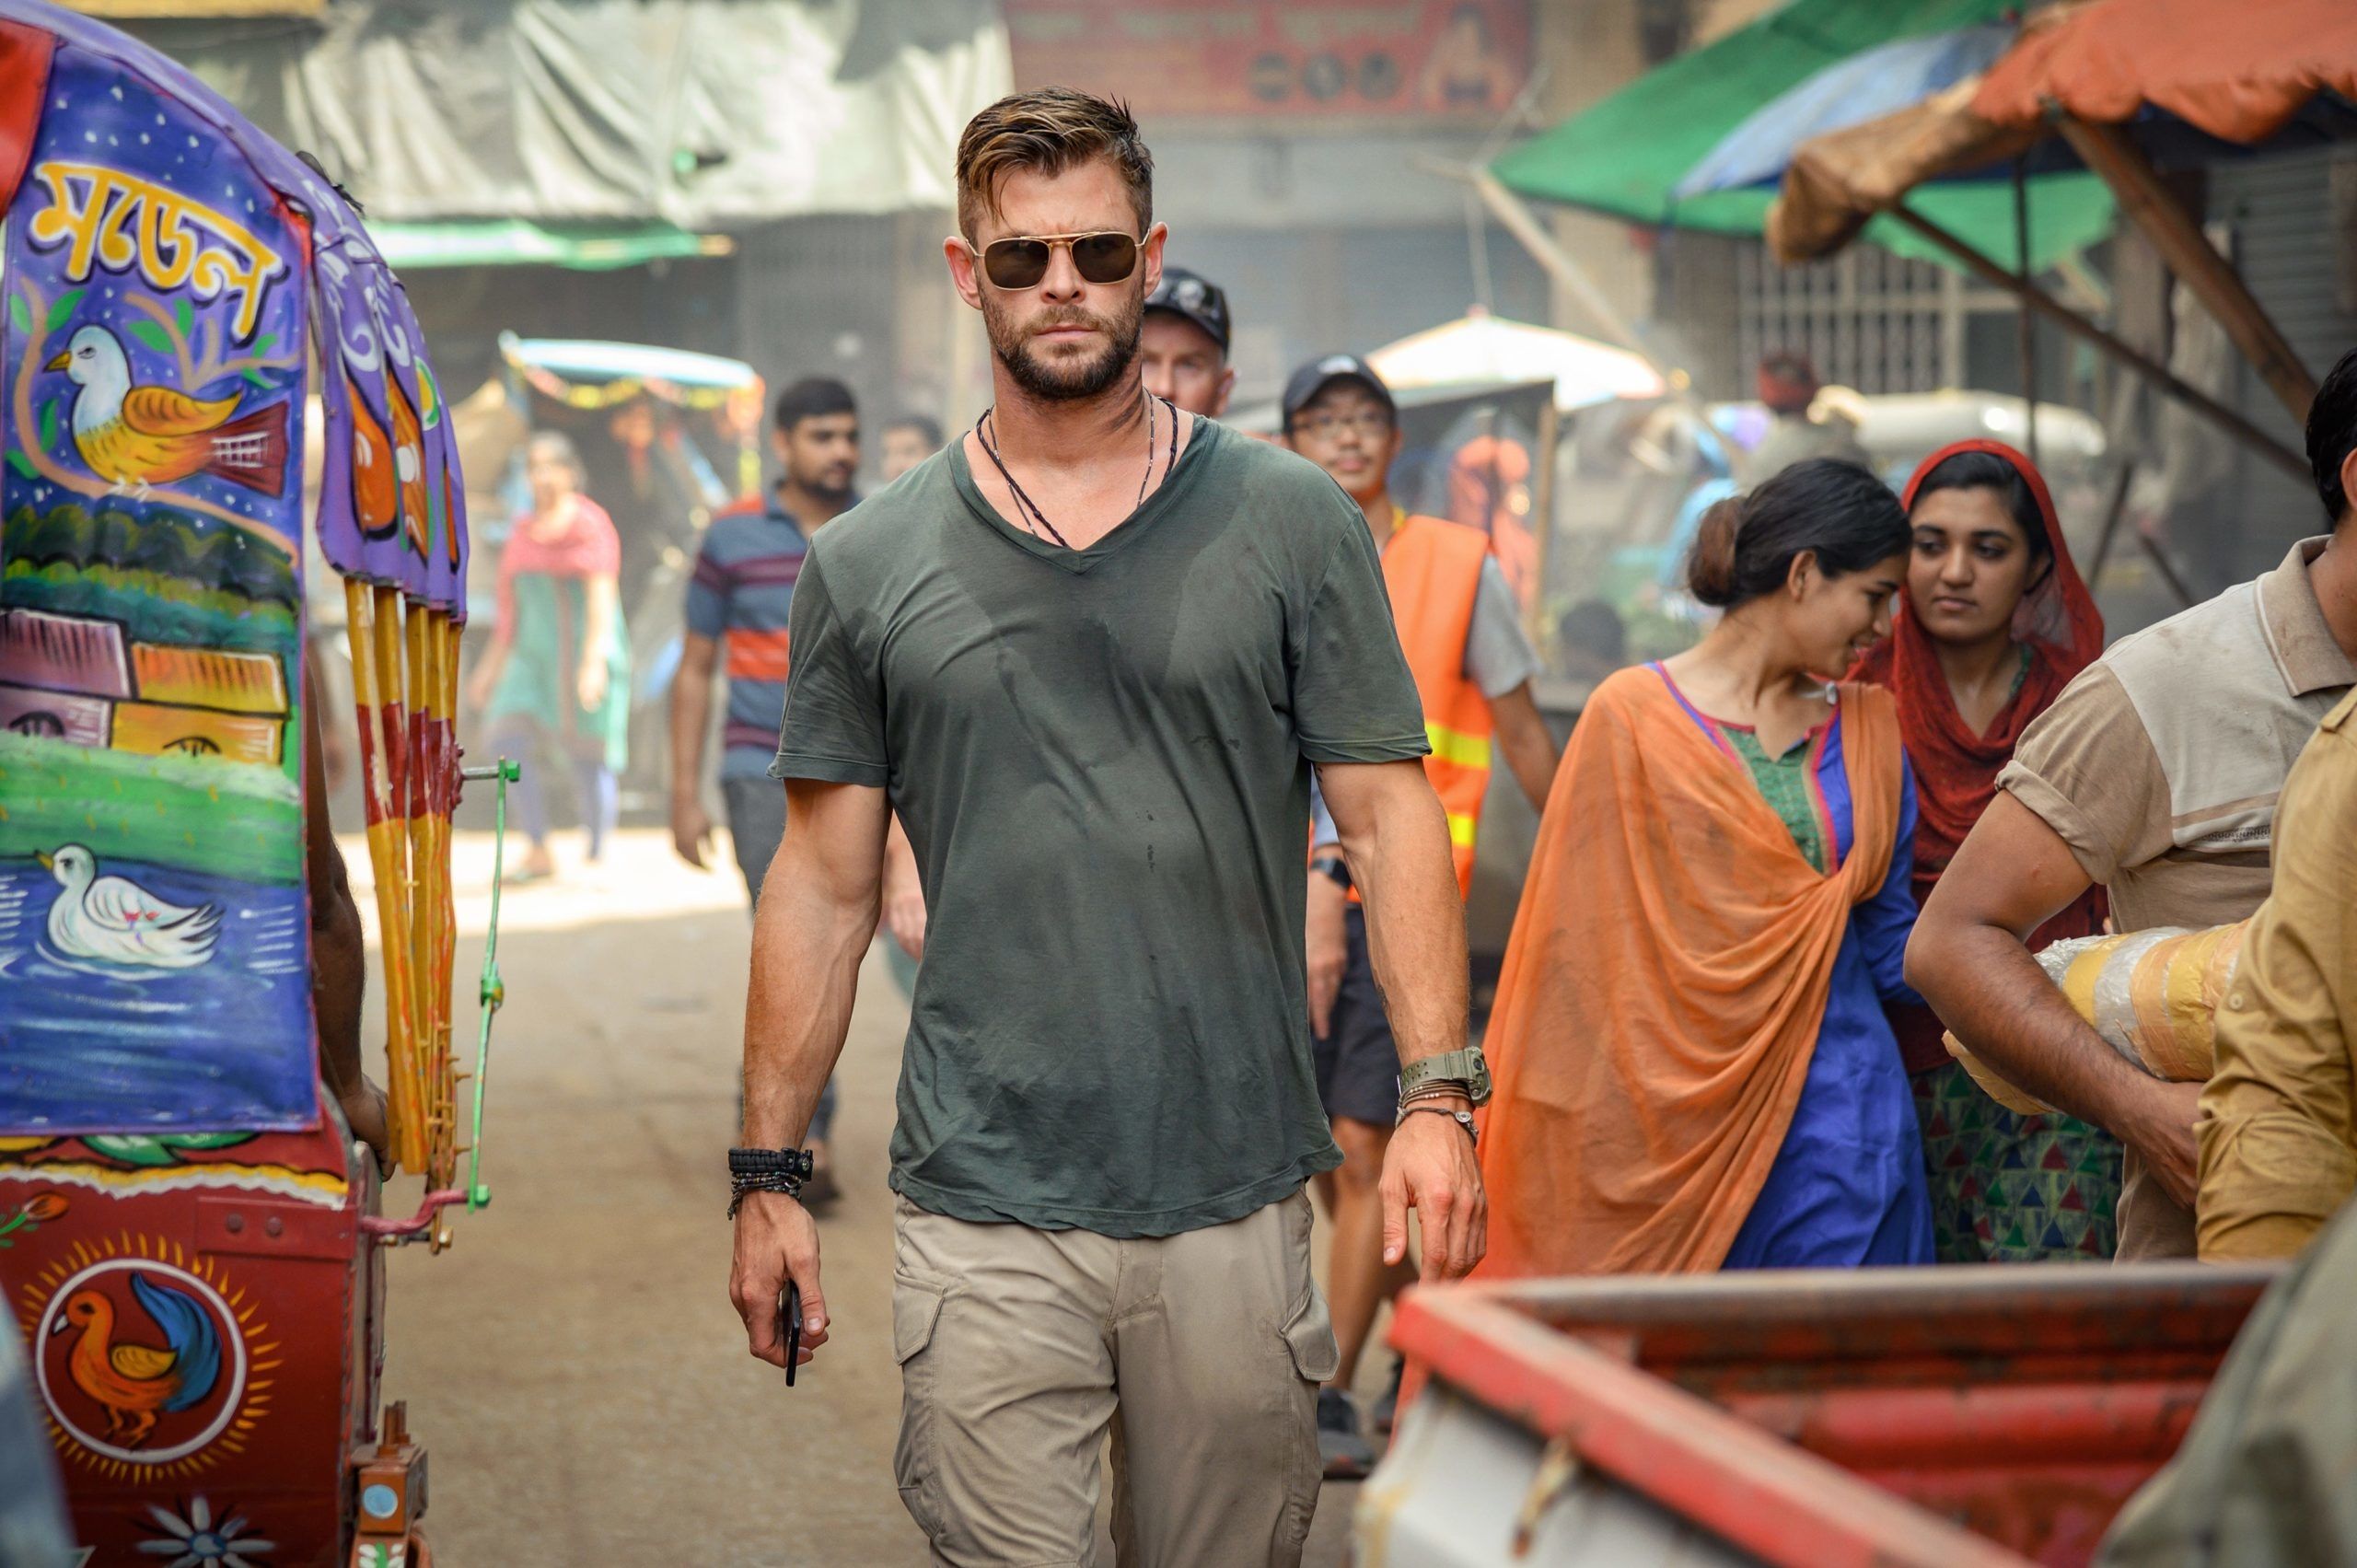 Chris Hemsworth in Extraction Wallpaper, HD Movies 4K Wallpaper